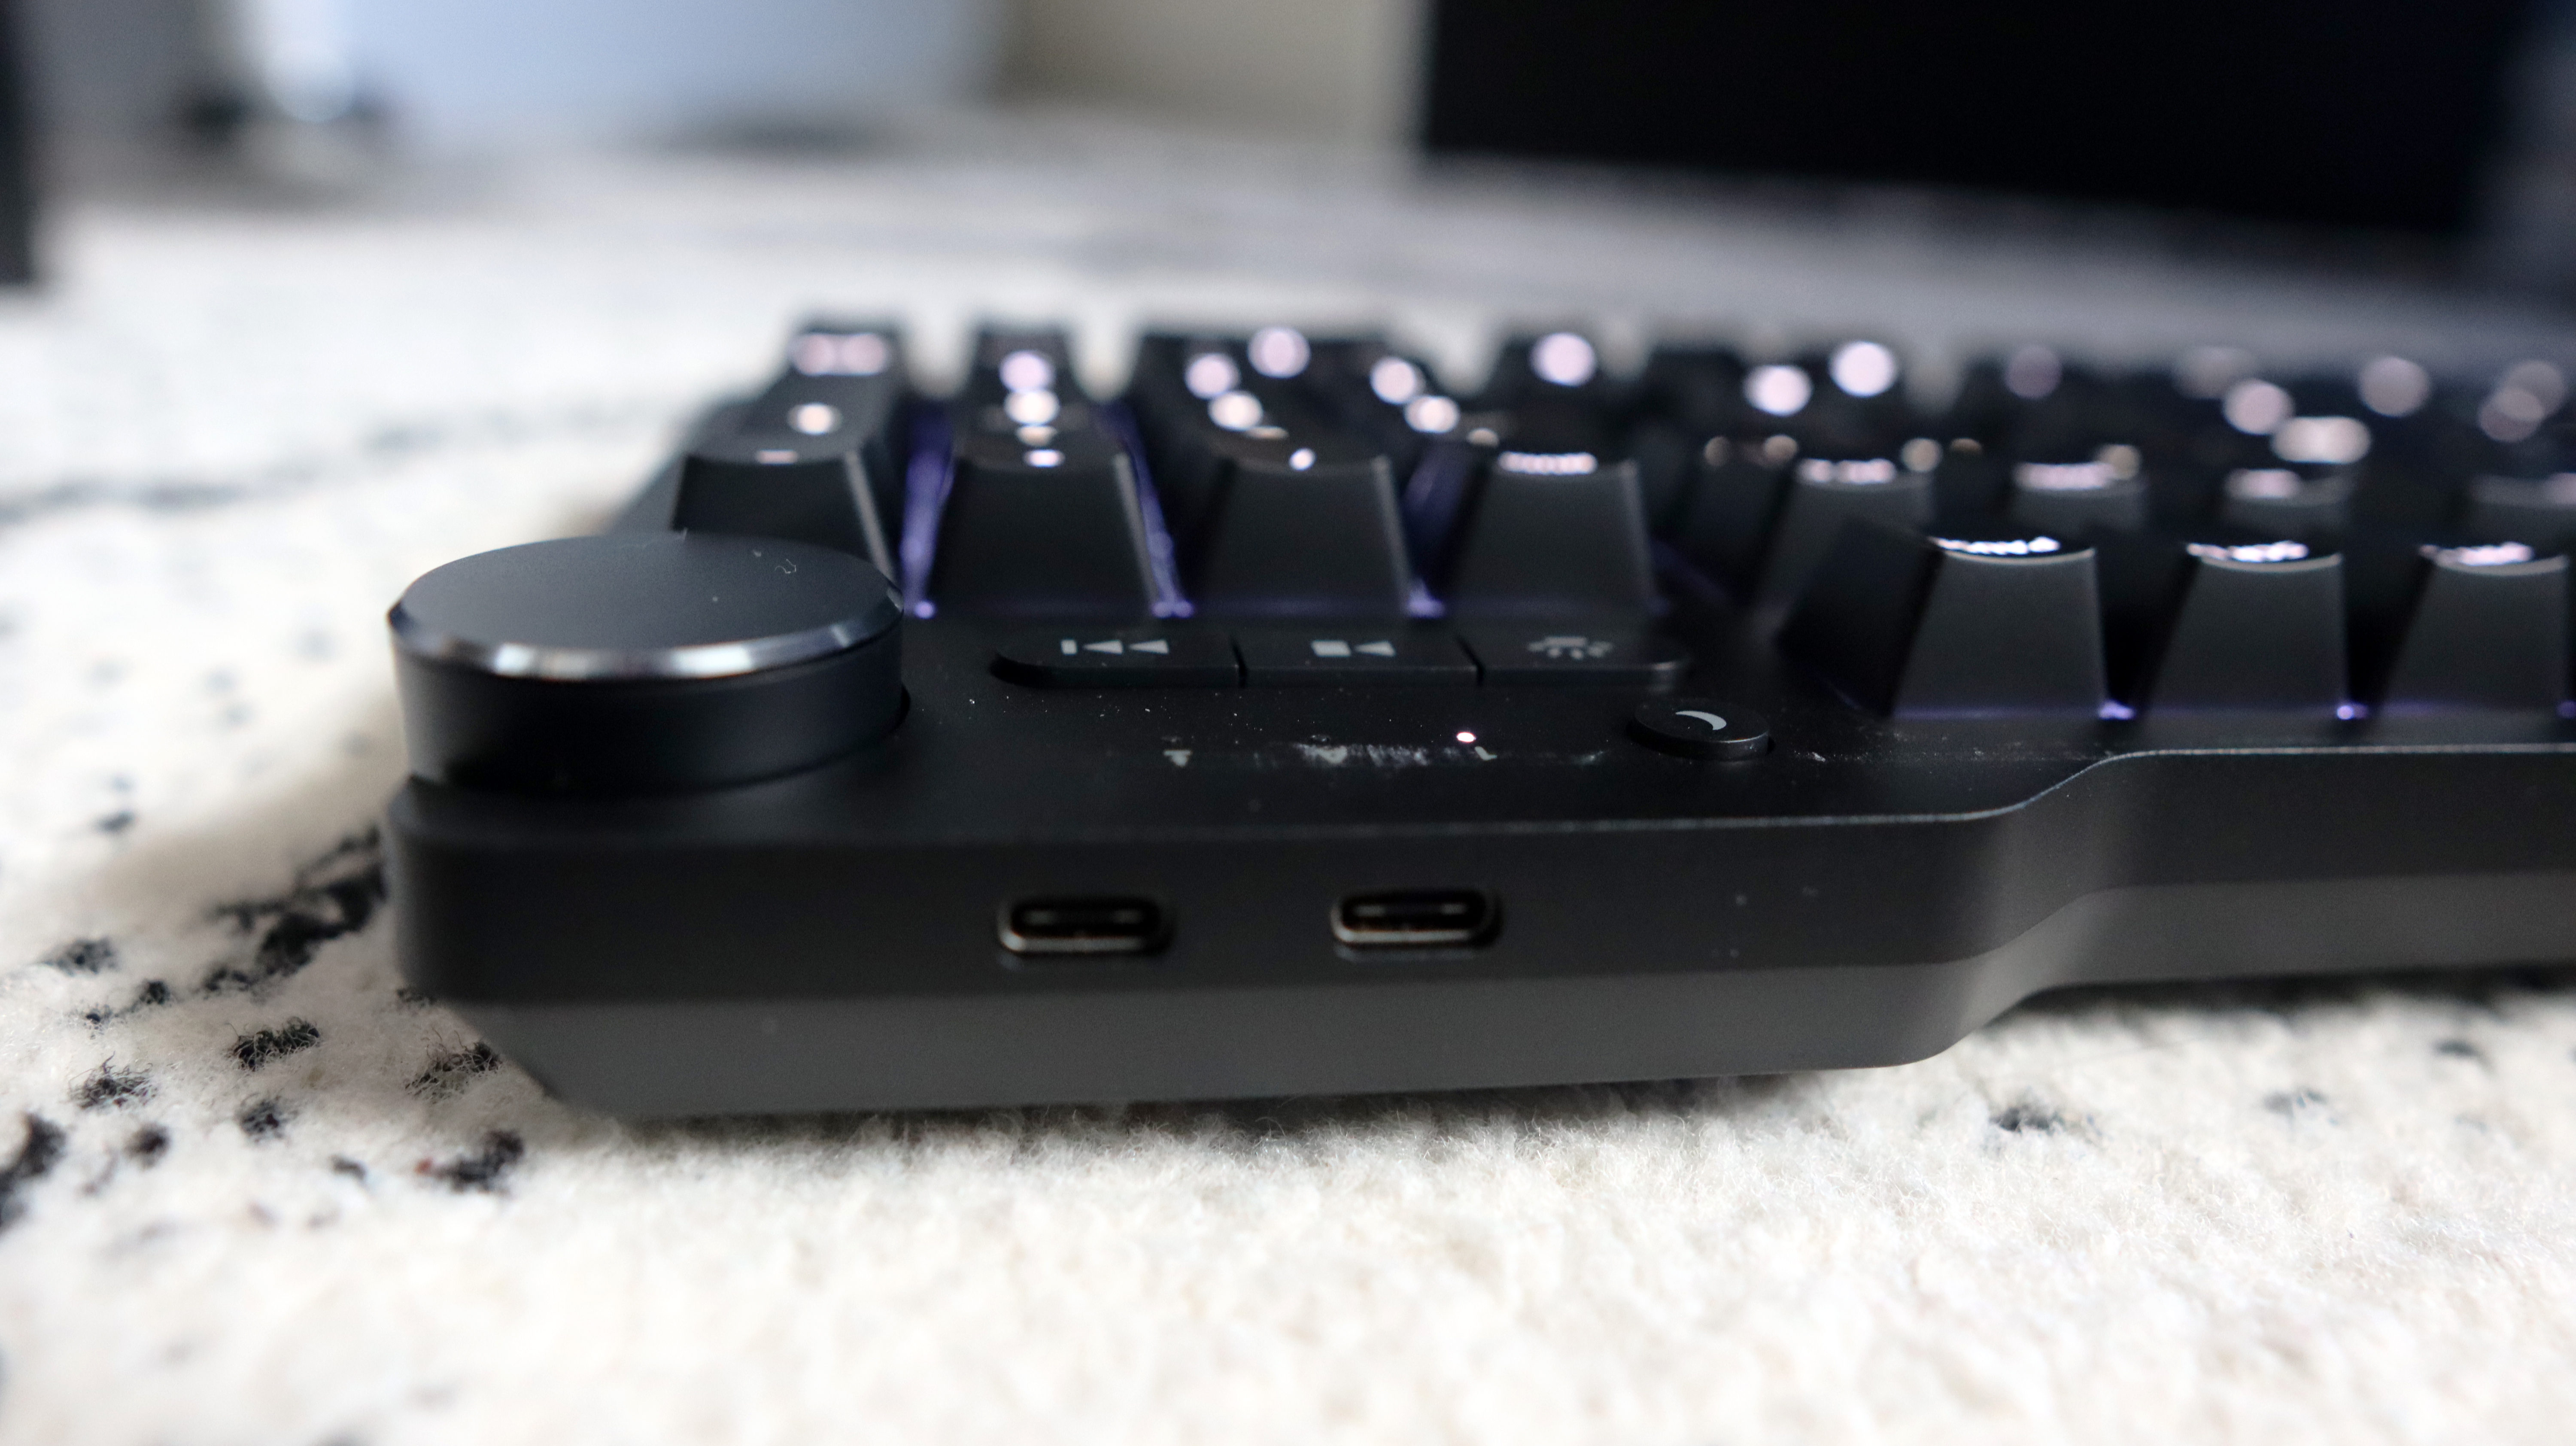 Das Keyboard 6 Professional keyboard on a carpet.